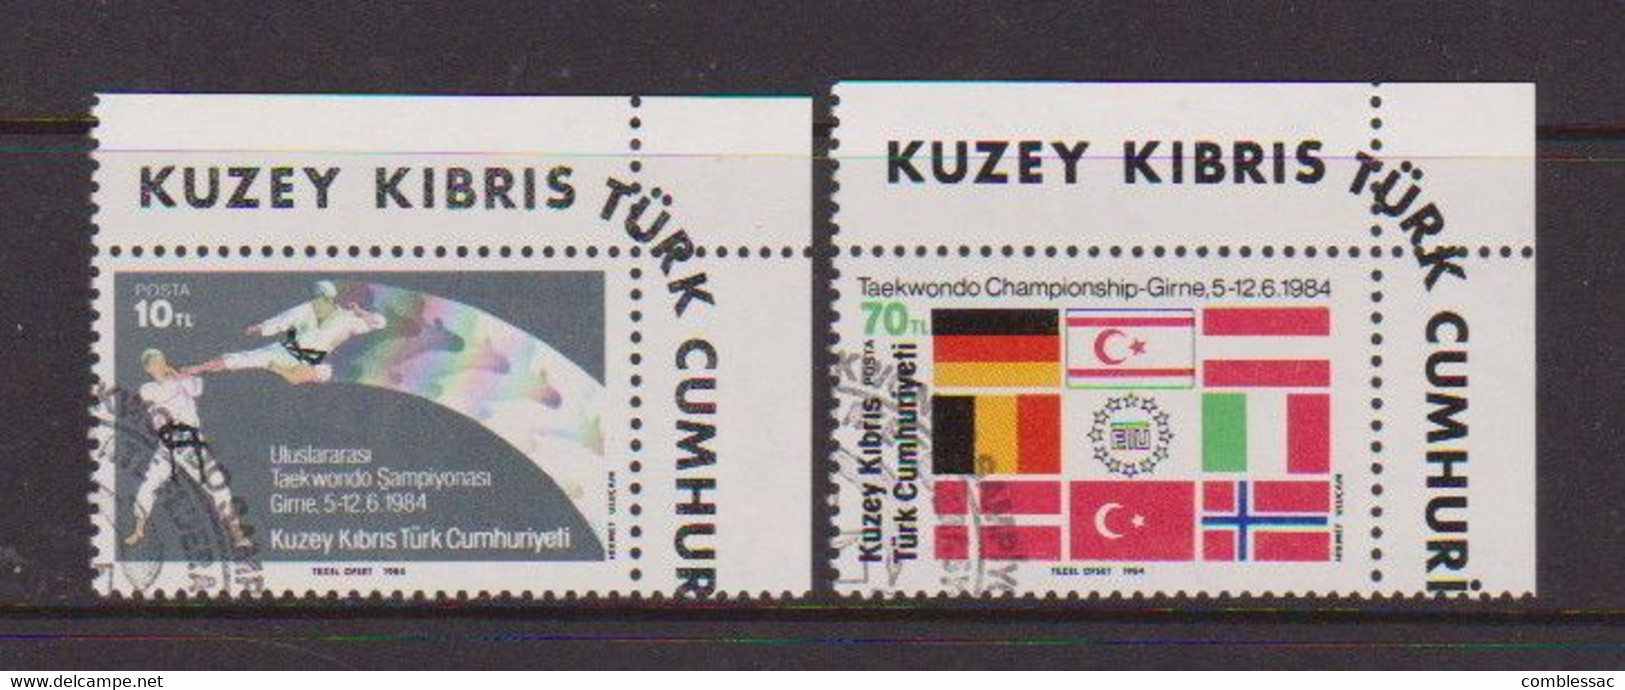 CYPRUS (TURKISH)    1984    International  Taekondo  Championships    Set  Of  2    USED - Used Stamps